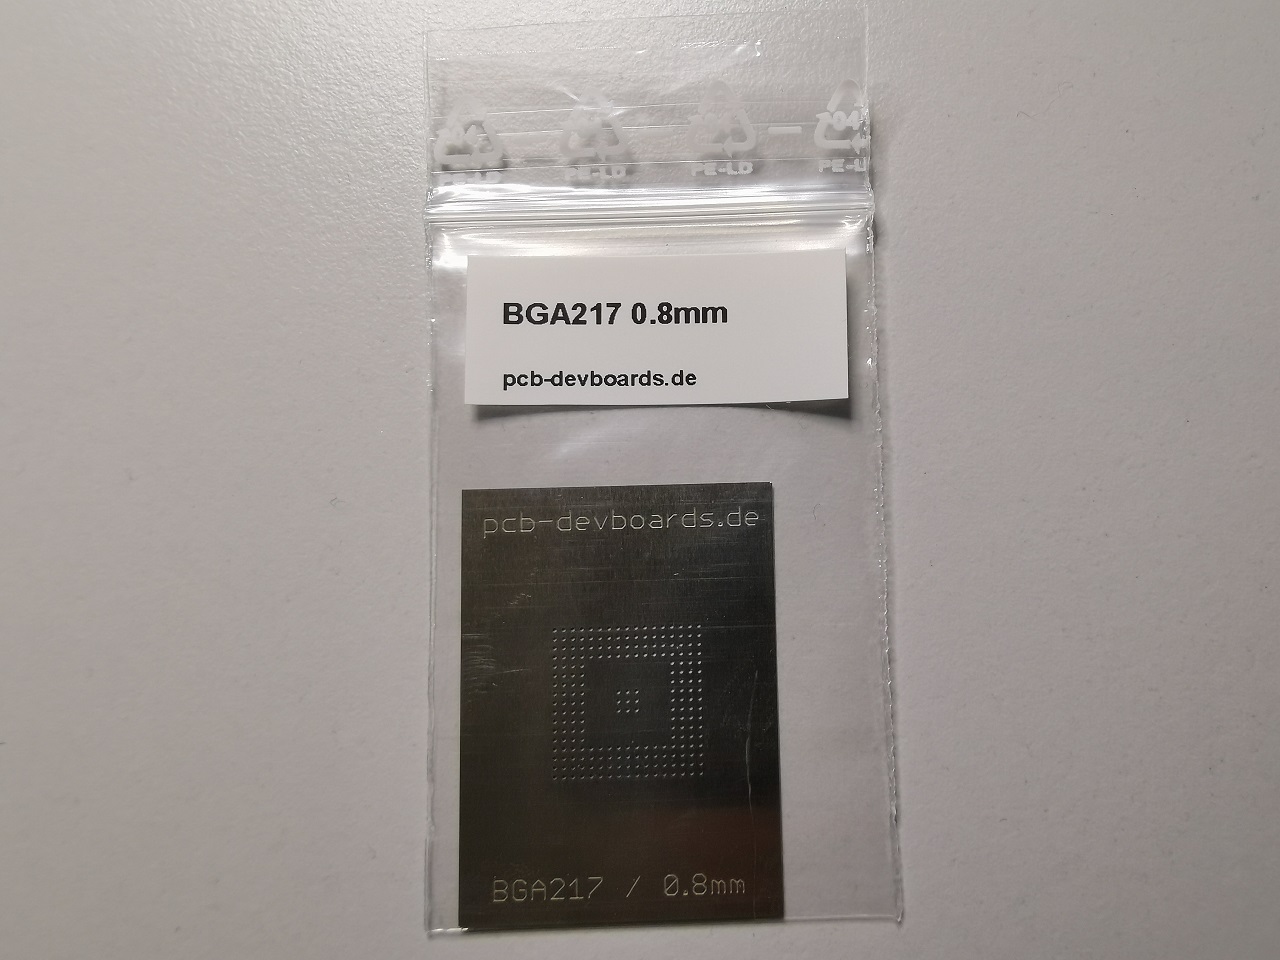 BGA217 0.8mm, SMD stencil